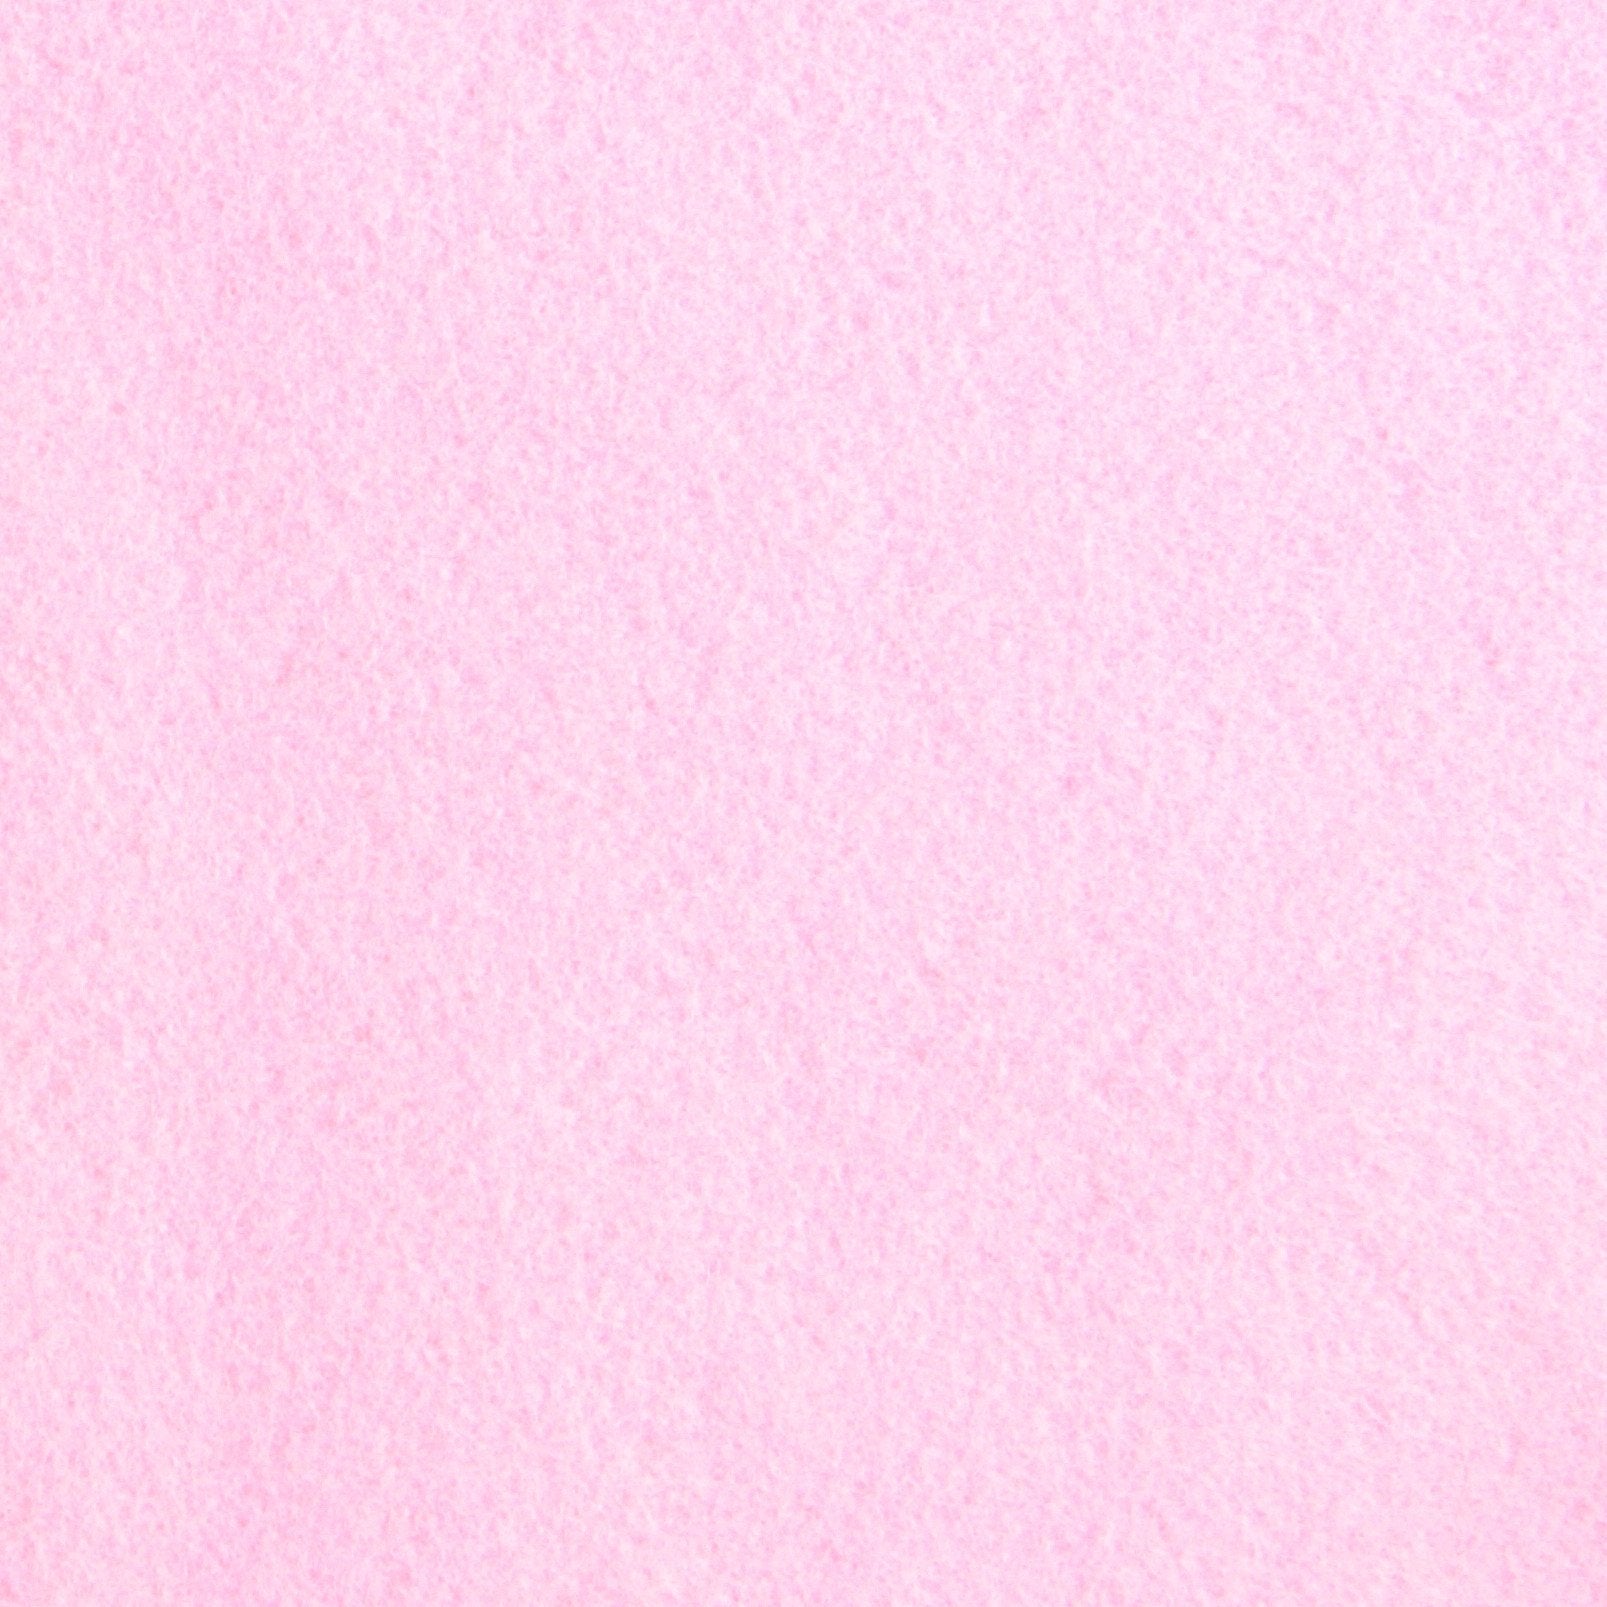  Off-White Felt - Wheat Field - Heathered Pinkish-Off White -  Wool Felt Giant Sheet - 35% Wool Blend - 1 36x36 inch XXL Sheet